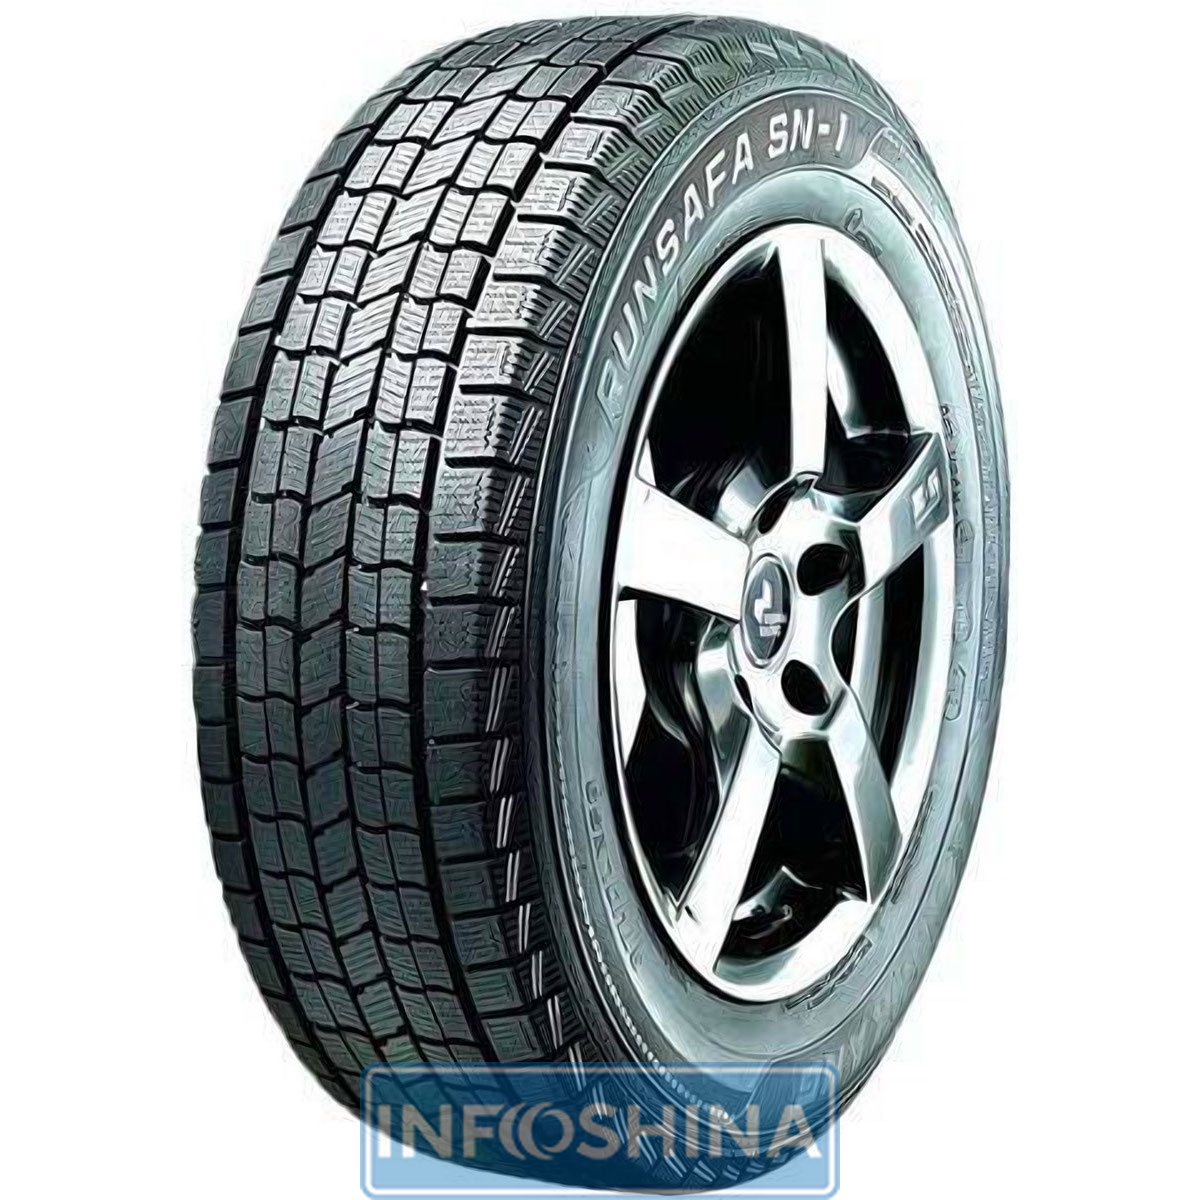 Купить шины Nankang Runsafa SN-1 155/65 R14 75Q